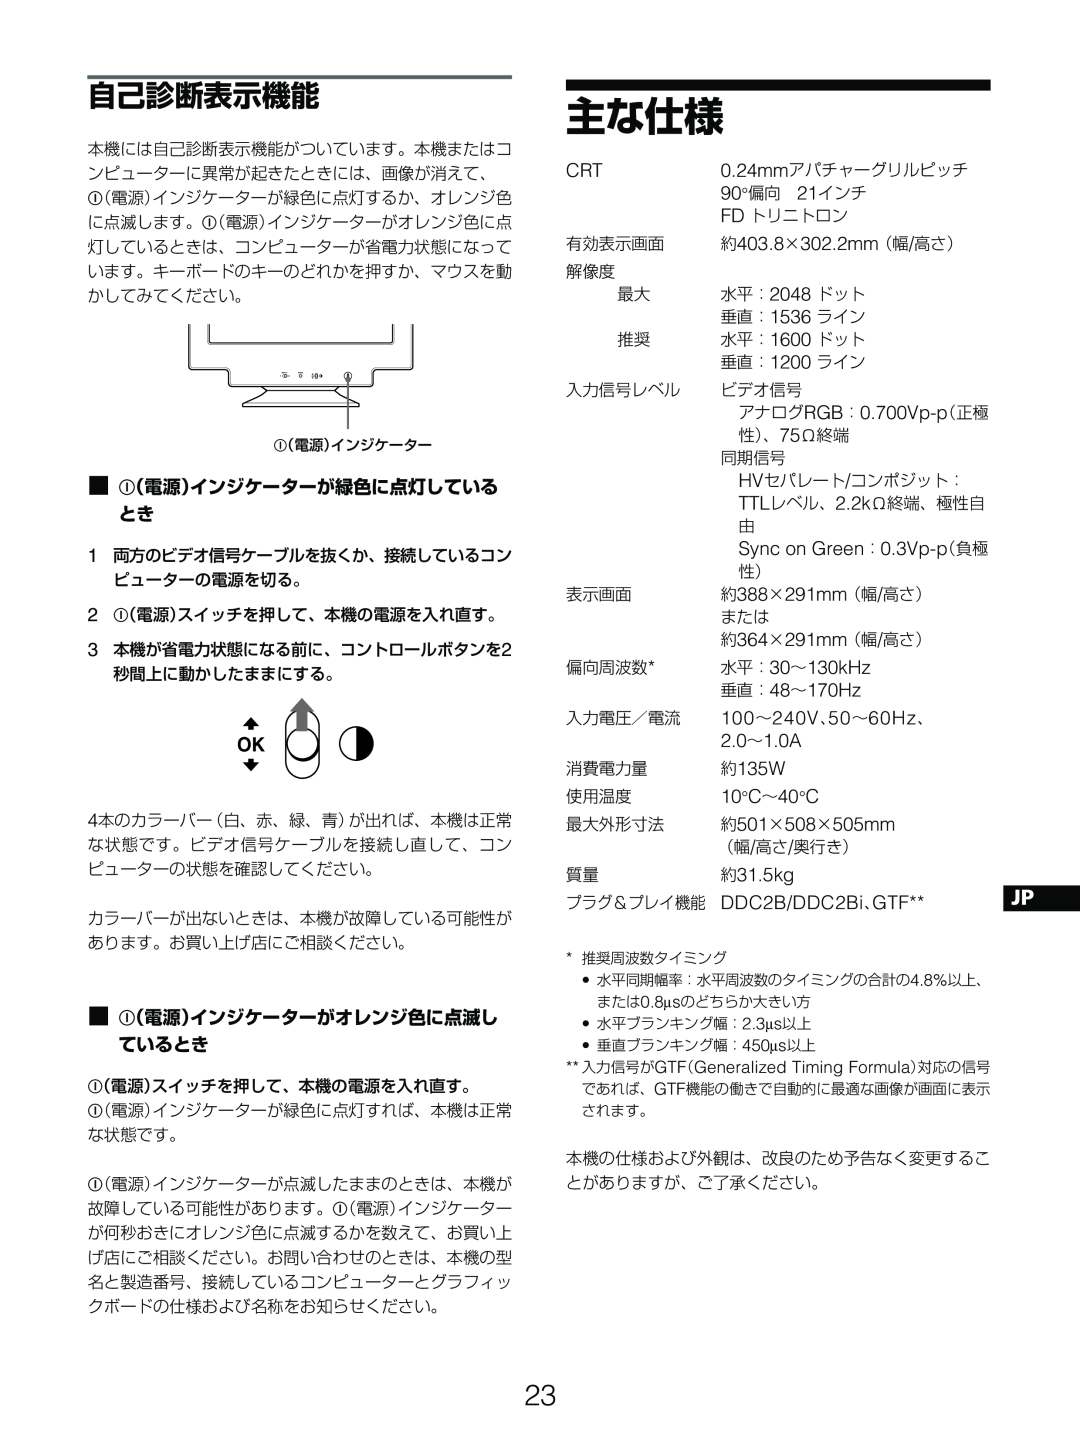 Sony GDM-5510 operating instructions 主な仕様, 自己診断表示機能 